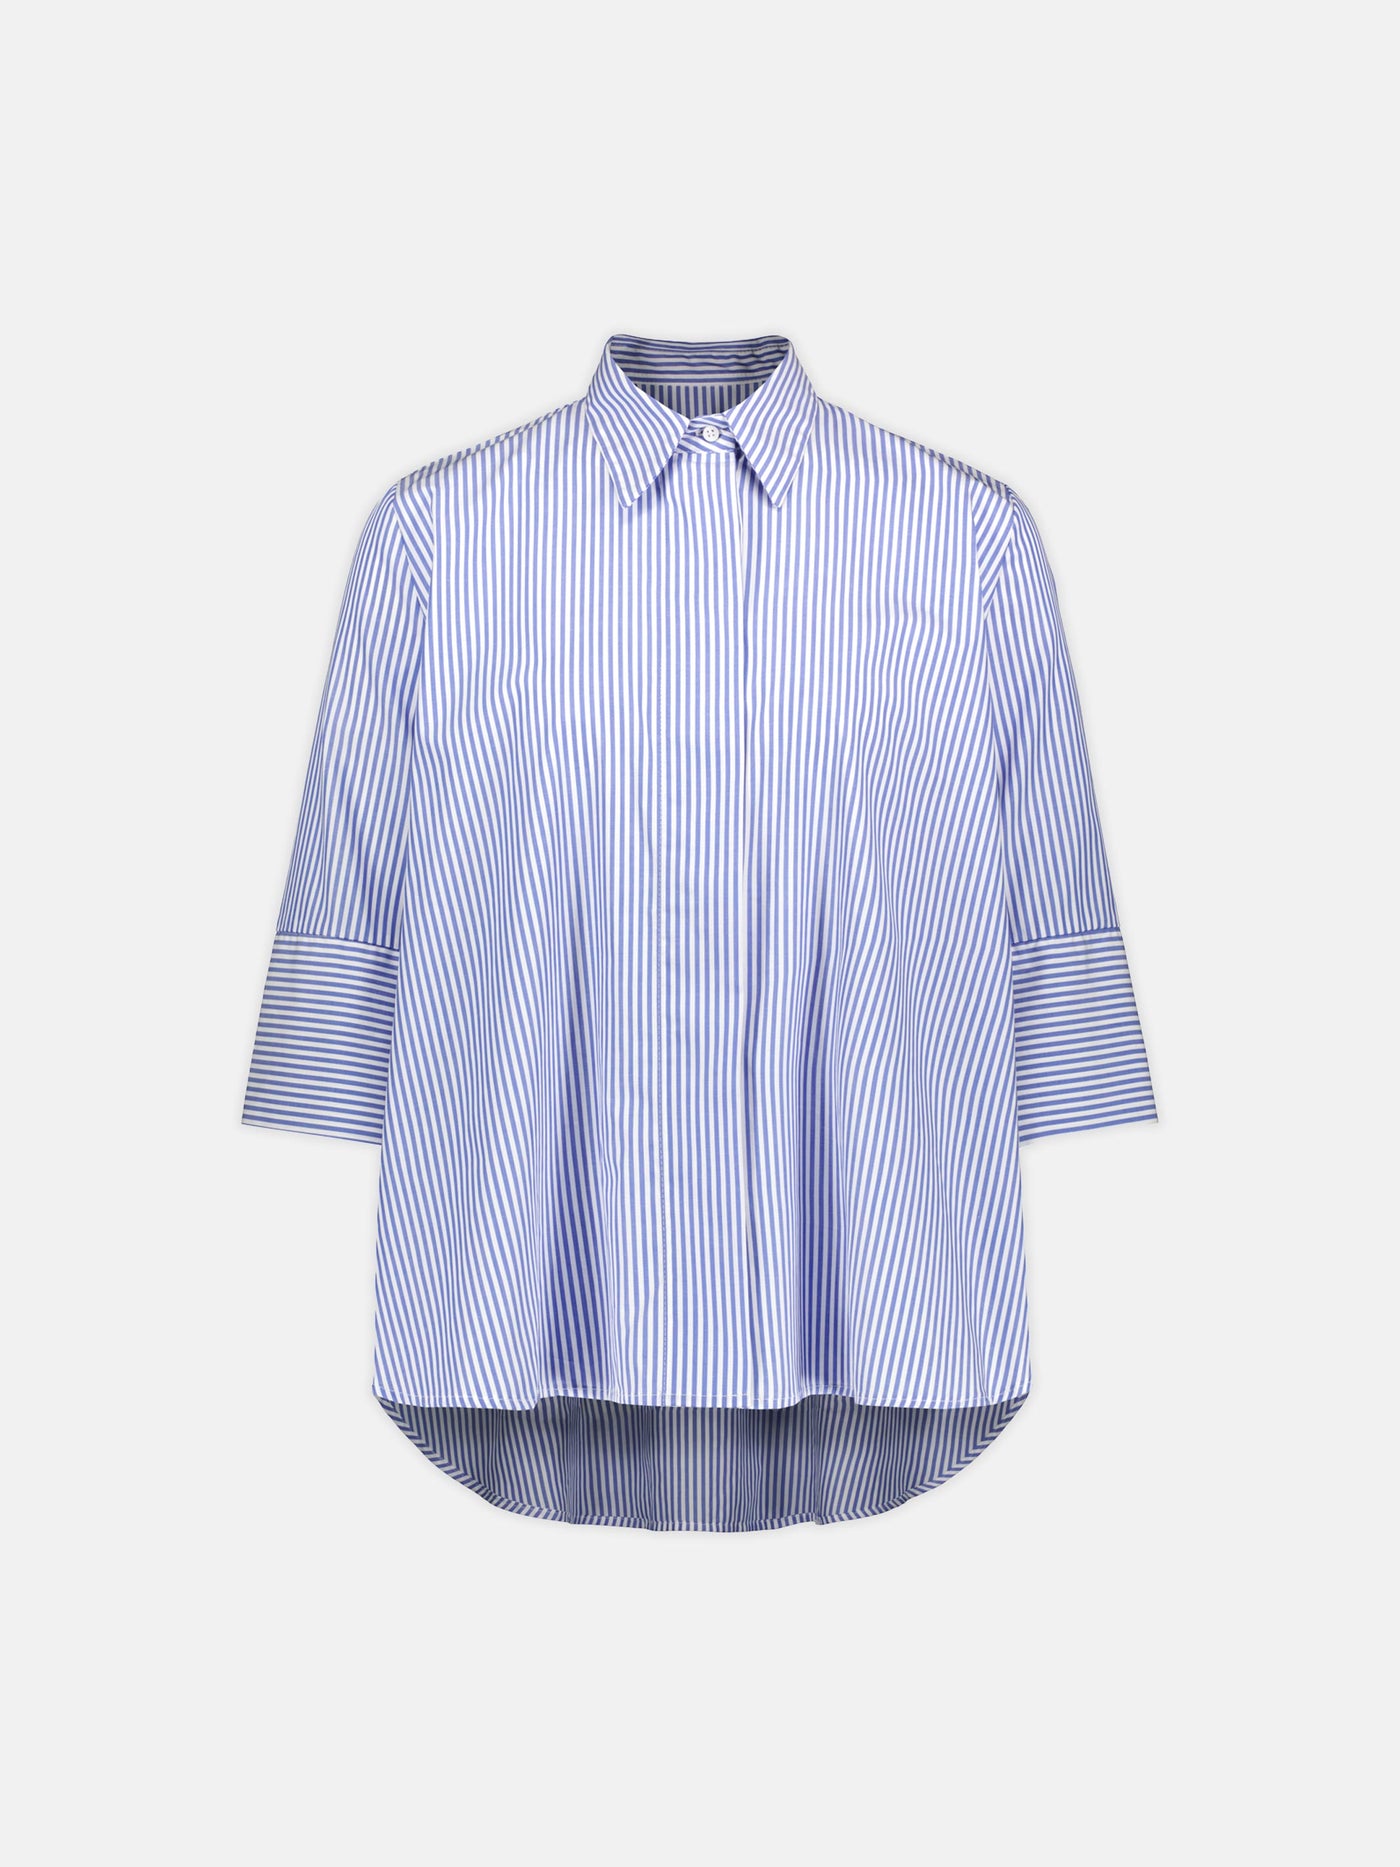 Button-down shirt, striped